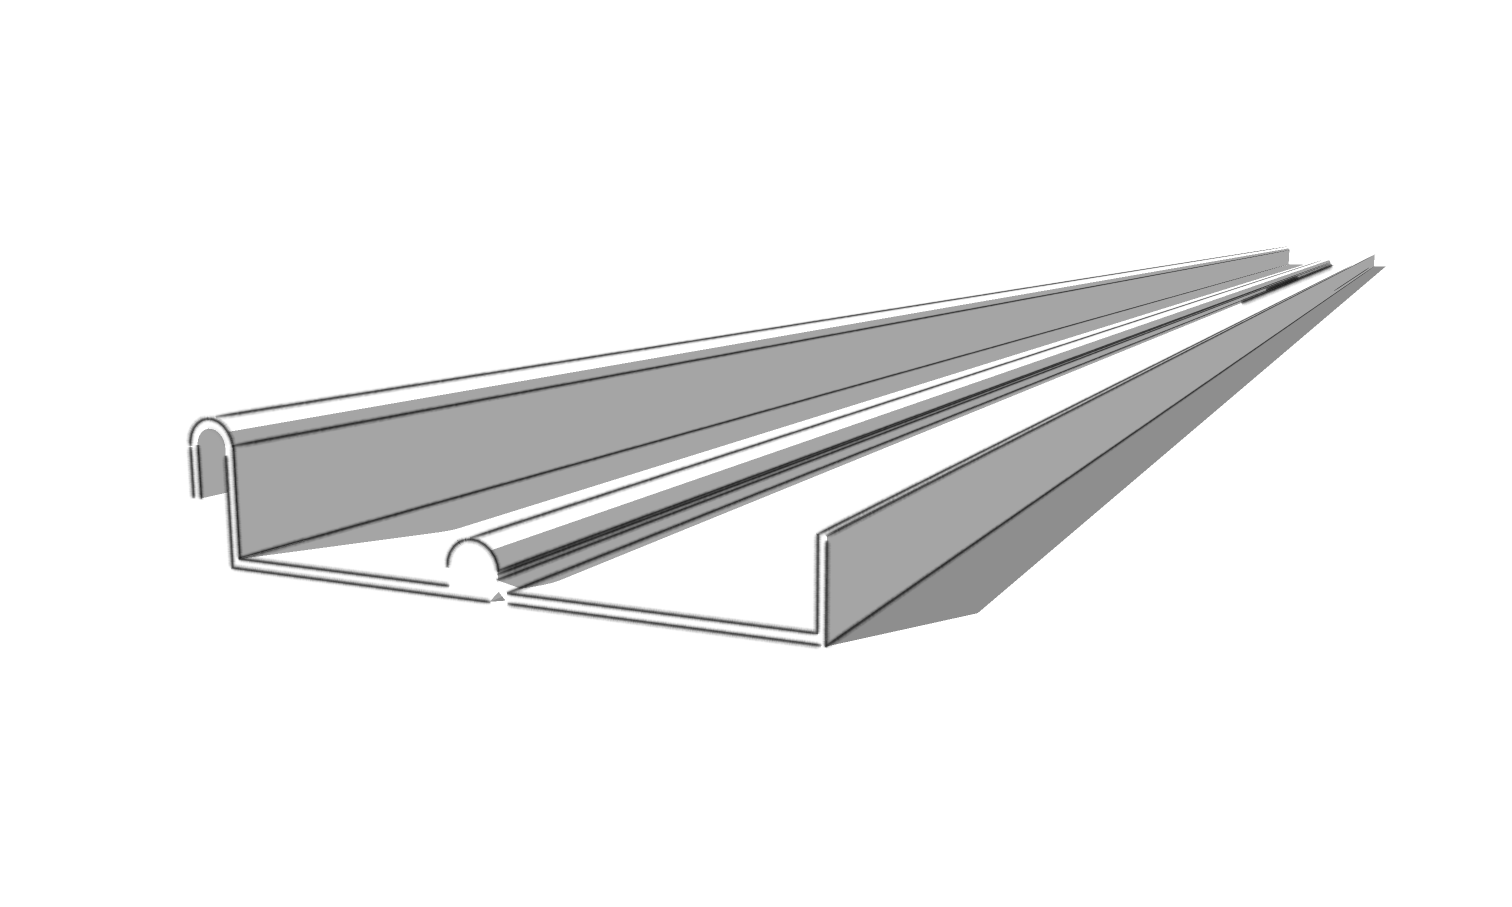 Single aluminum louver blade for pergola roof systems.